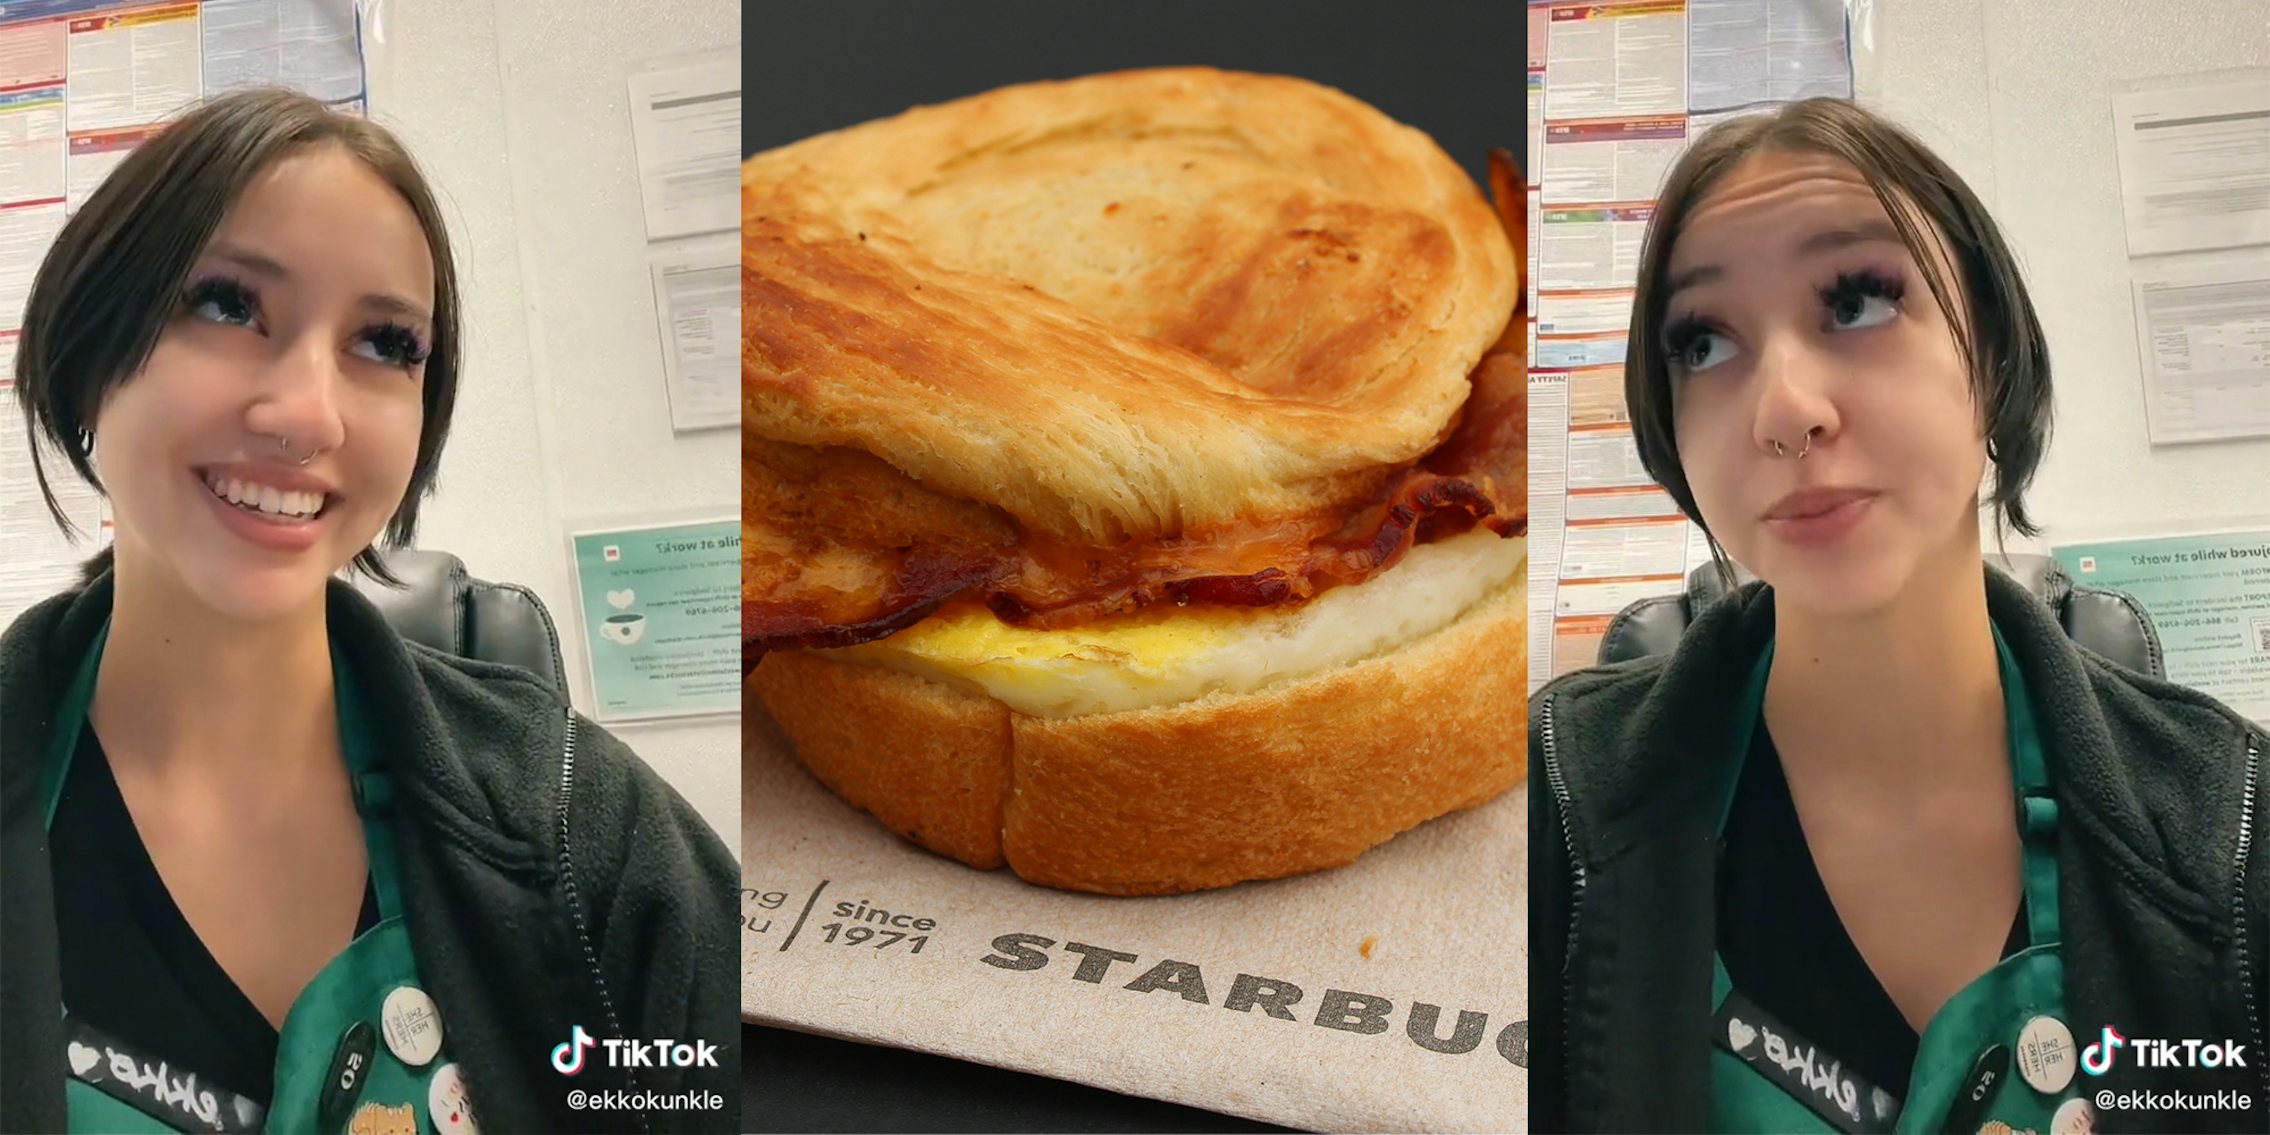 young woman in starbucks uniform (l&r) Starbucks sandwich on napkin (c)